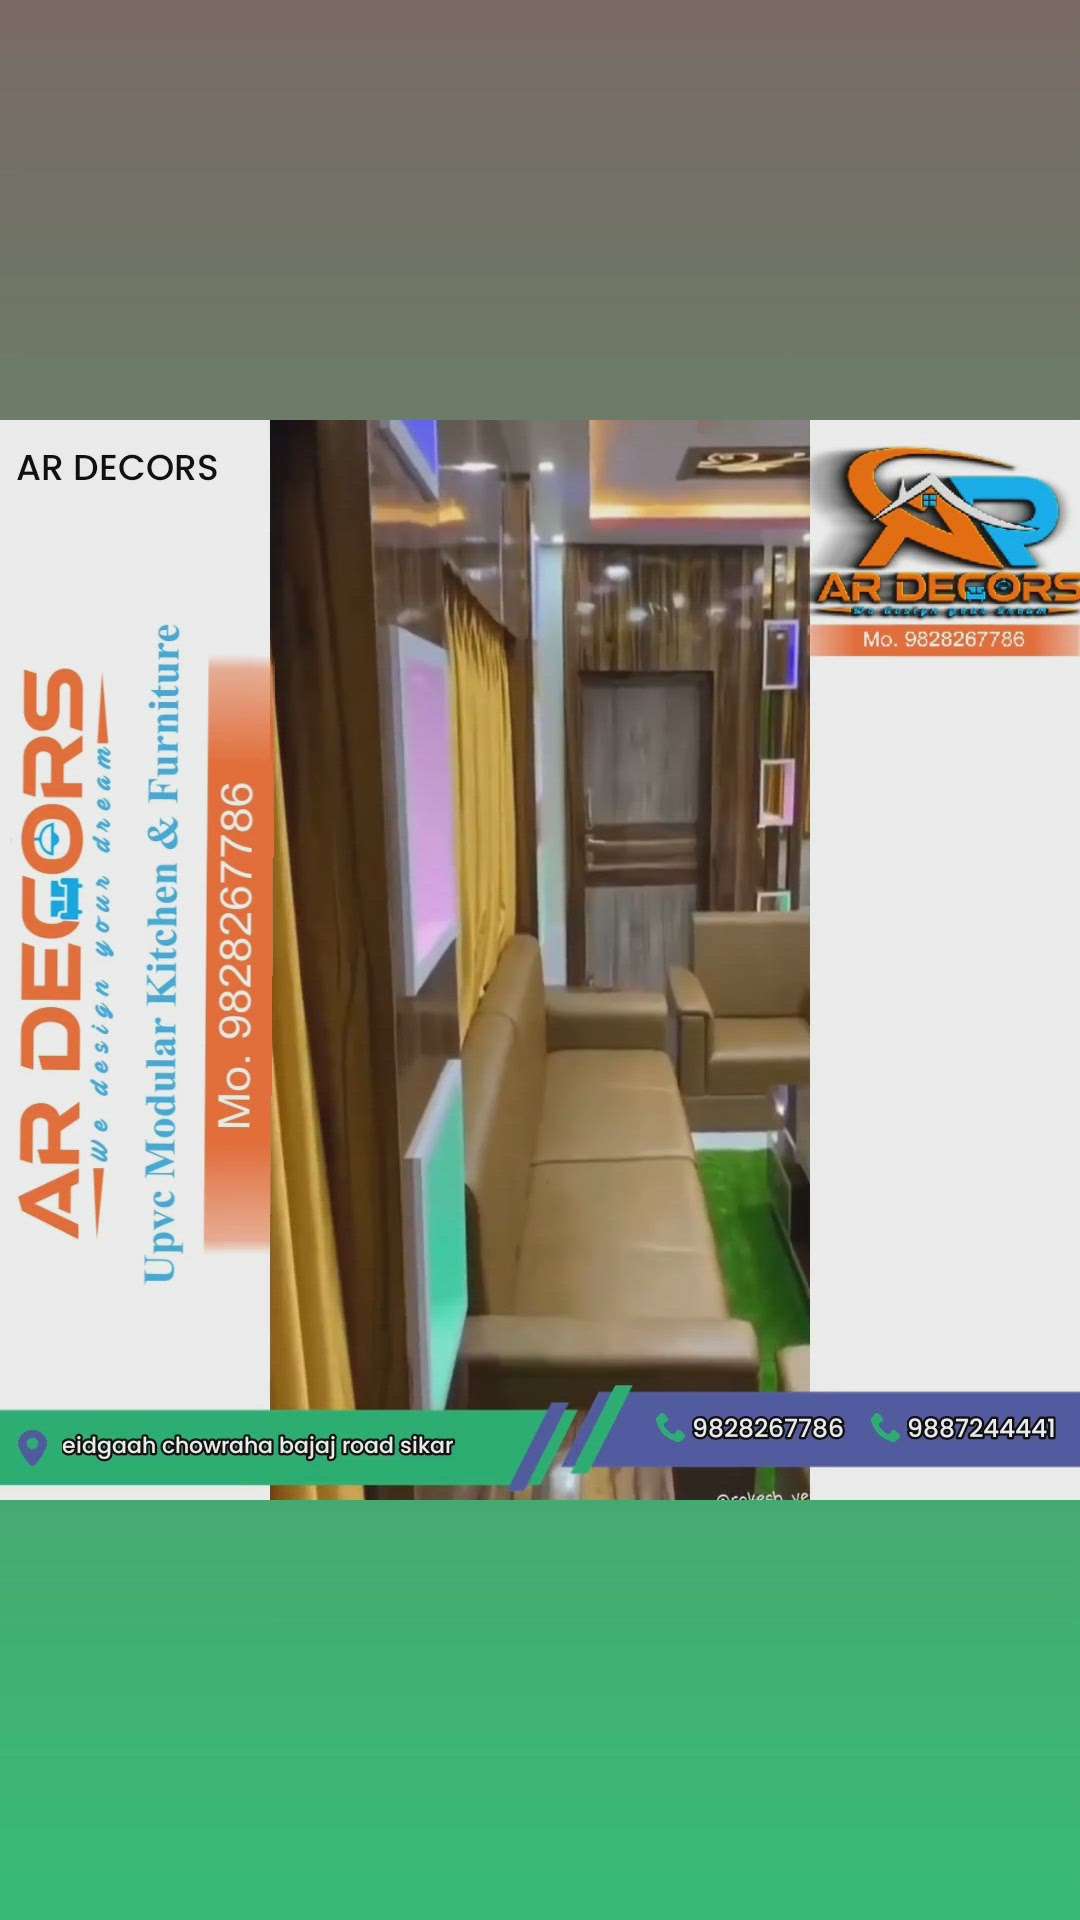 ar decors 9828267786
pvc false celling  #HomeDecor  #InteriorDesigner #KitchenIdeas  #furniture